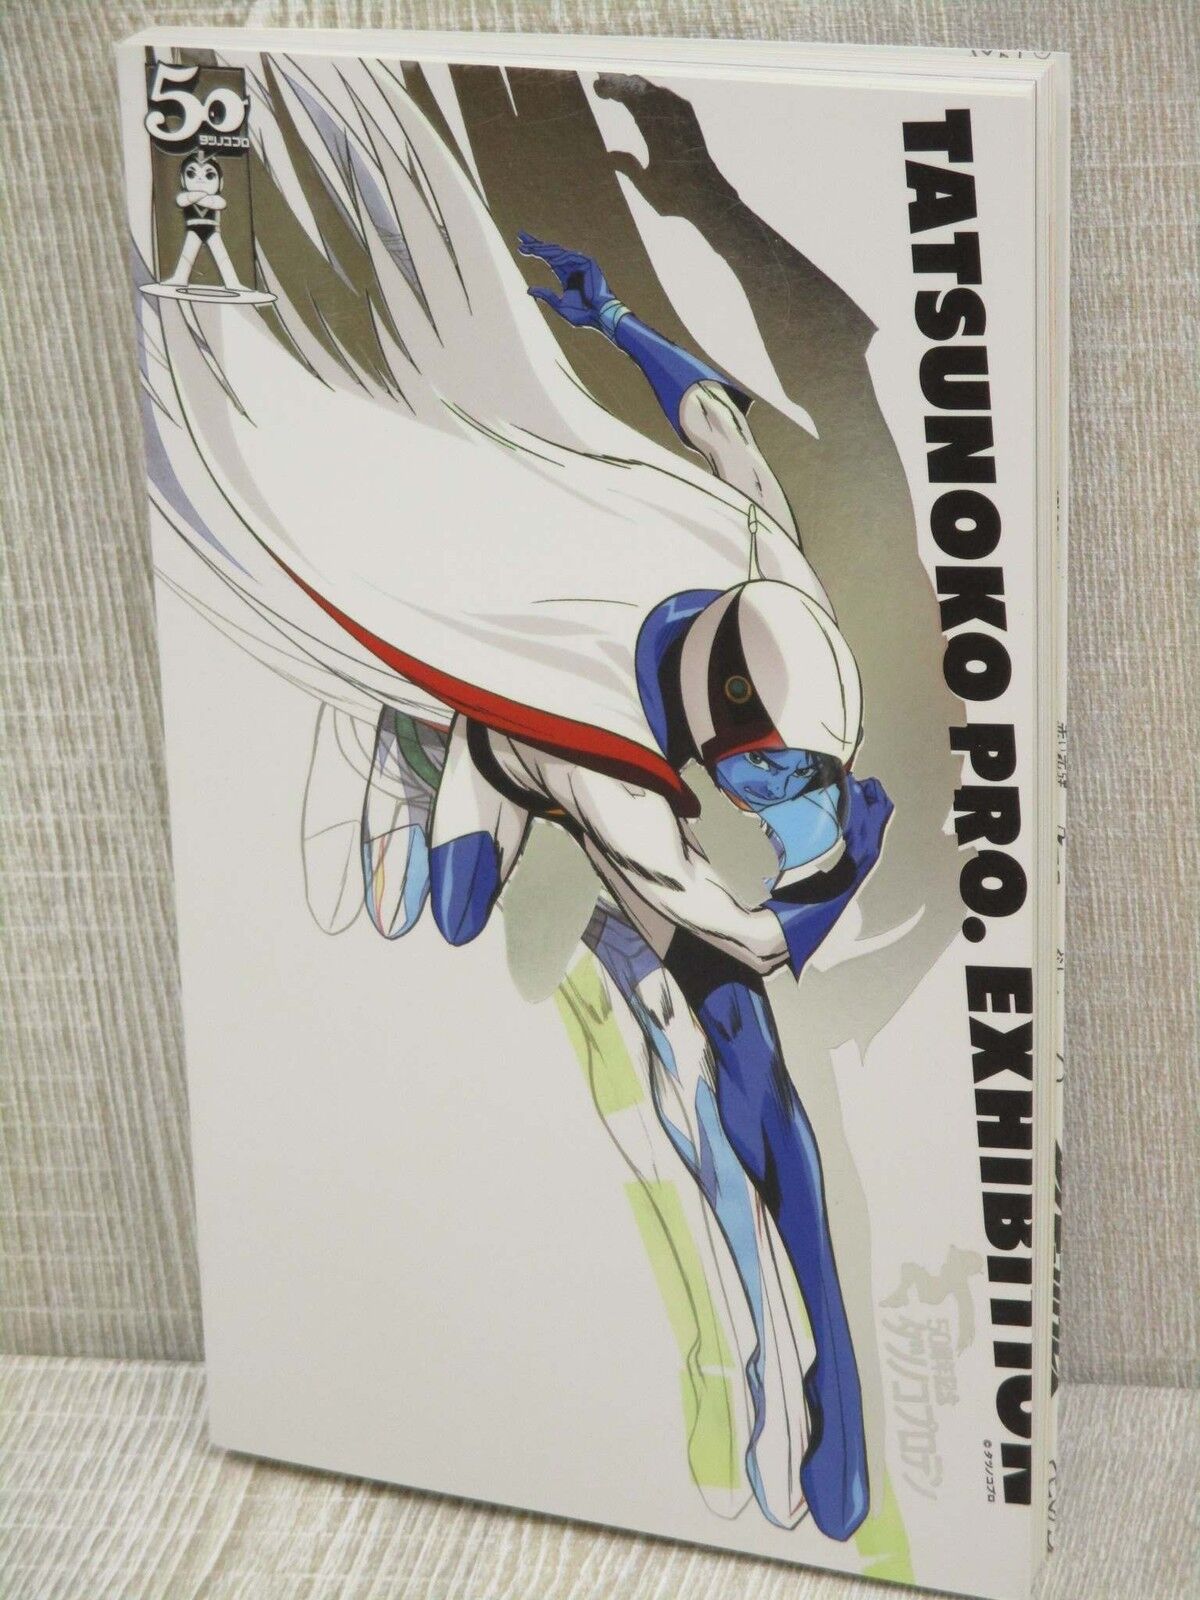 TATSUNOKO PRO EXHIBITION 50th Anniv. Art Works Fan Book Gatchaman 2012 Ltd